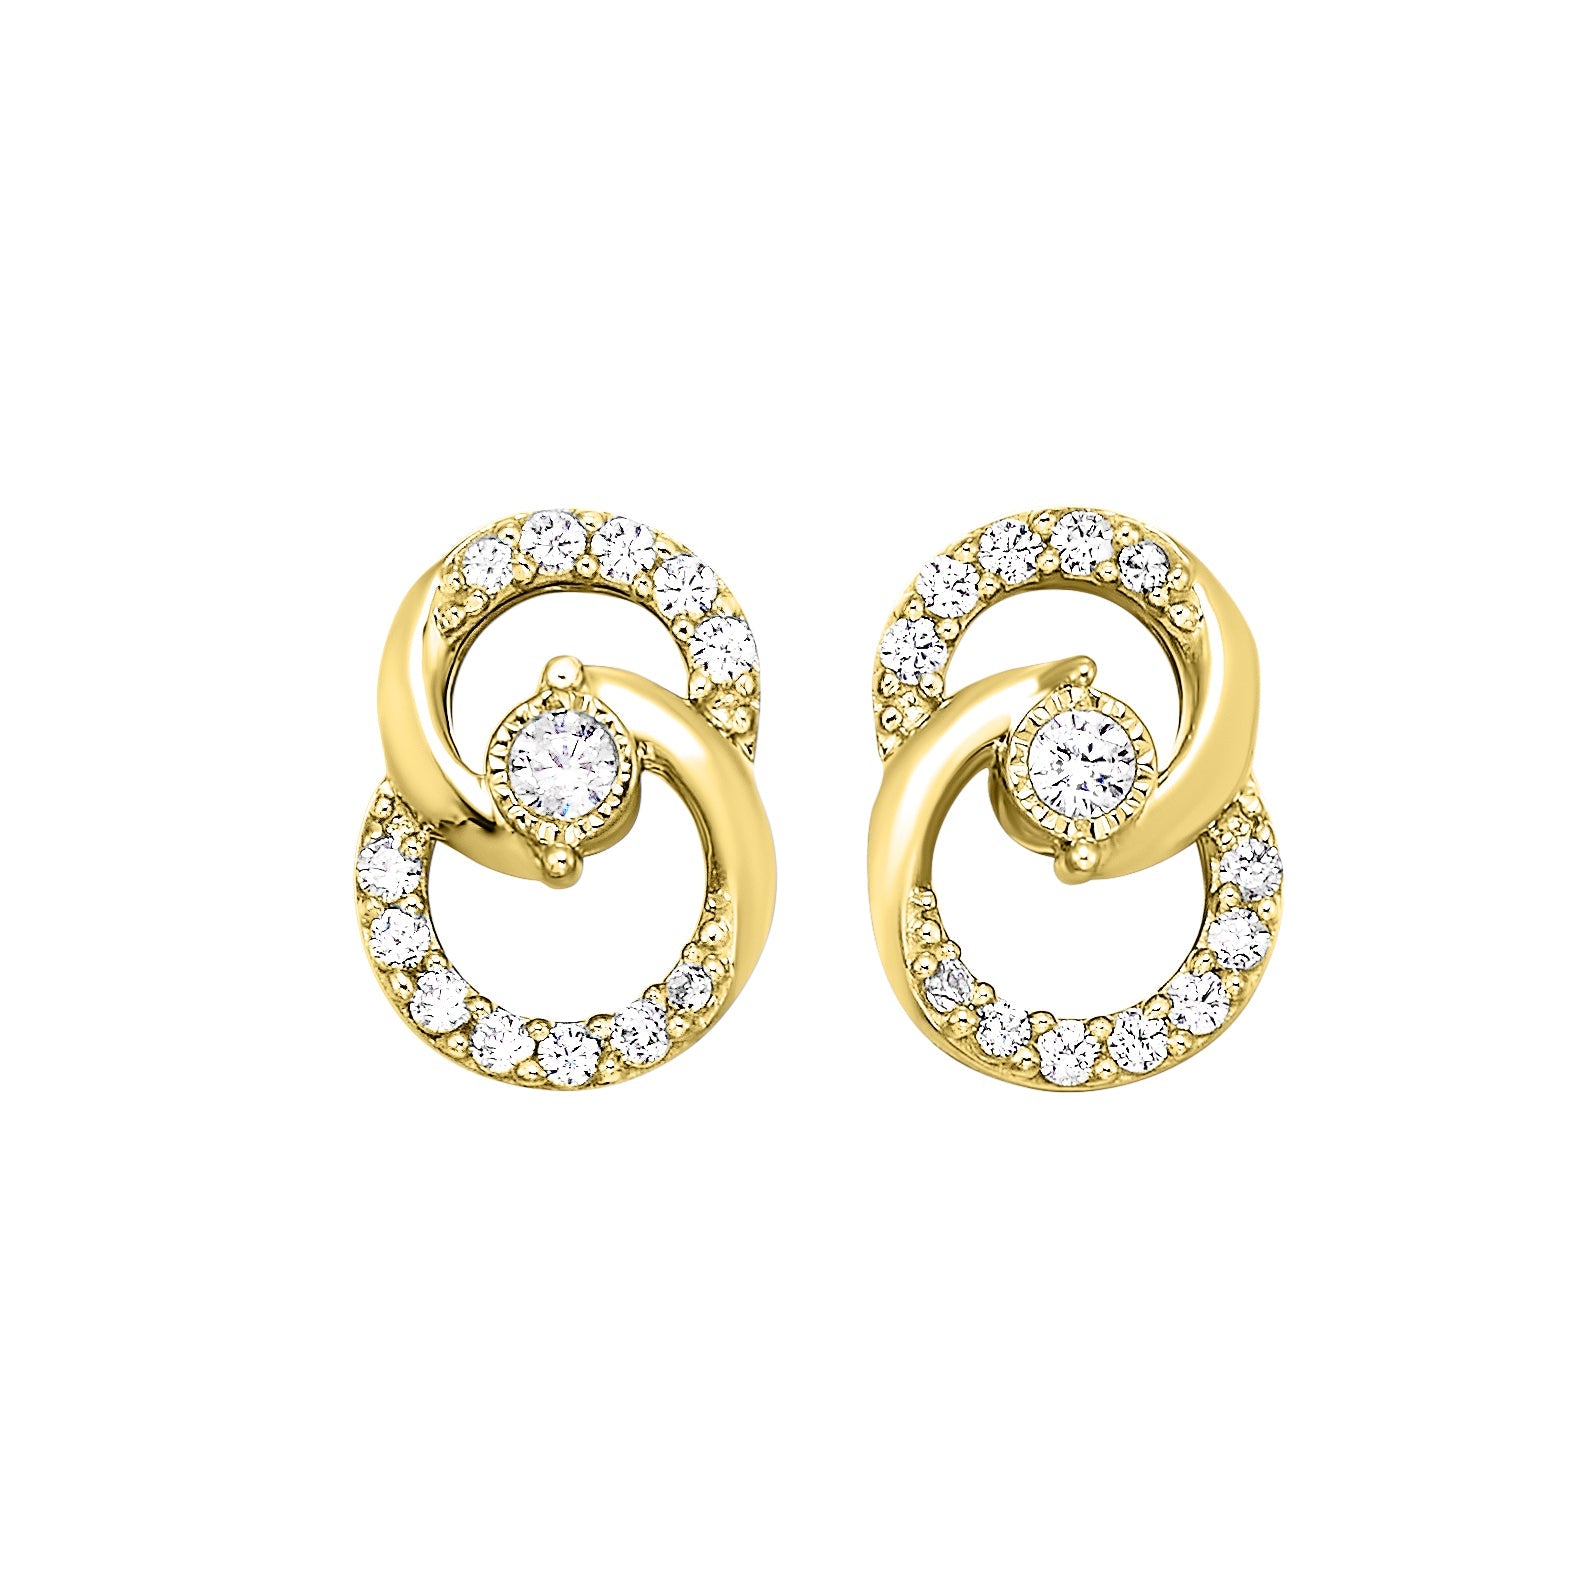 10kt yellow gold diamond 1/4ctw earring